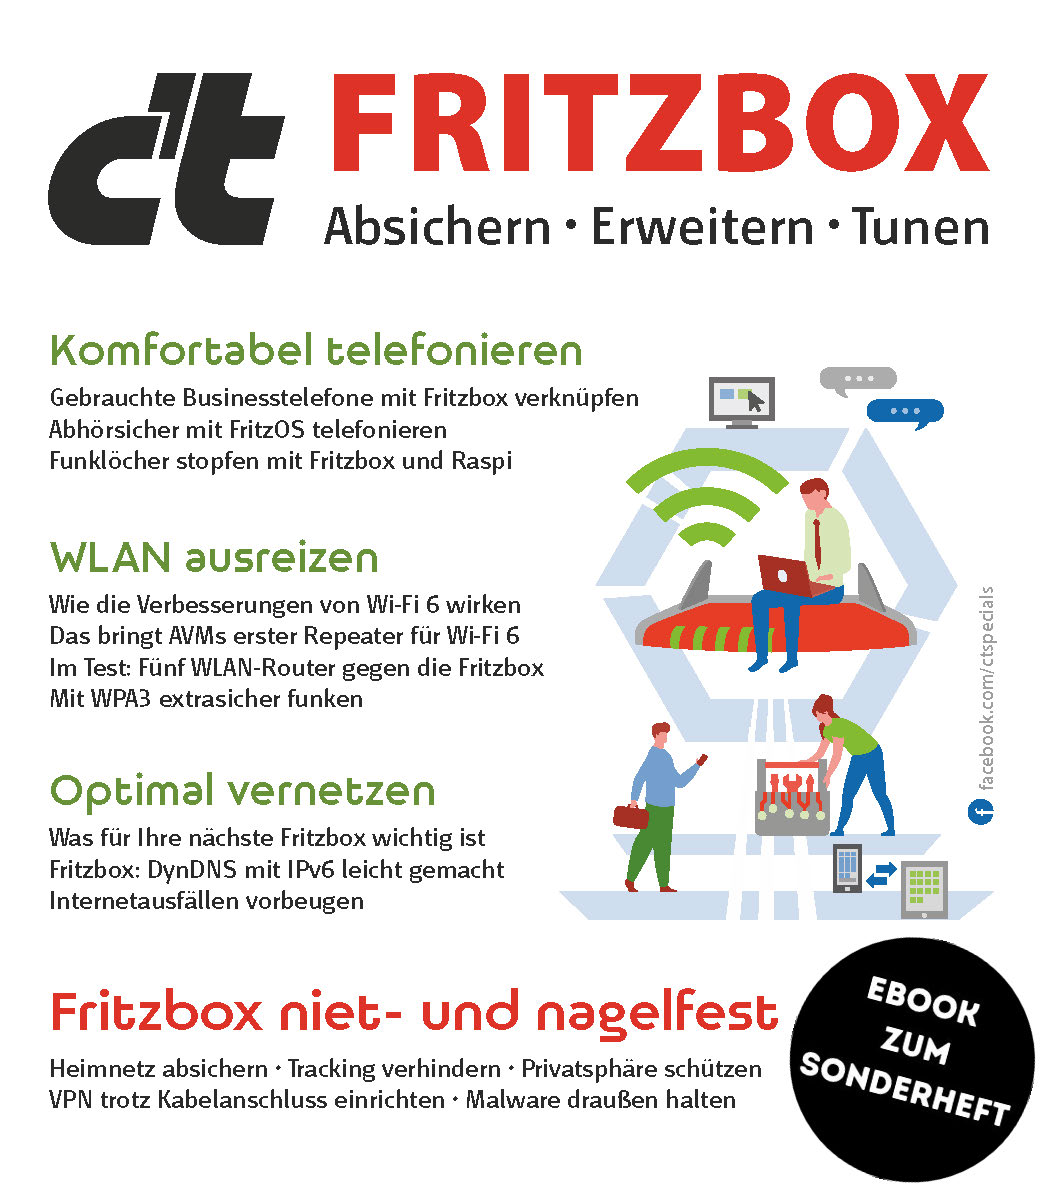 c't Fritzbox 21 (eBook zum Sonderheft)